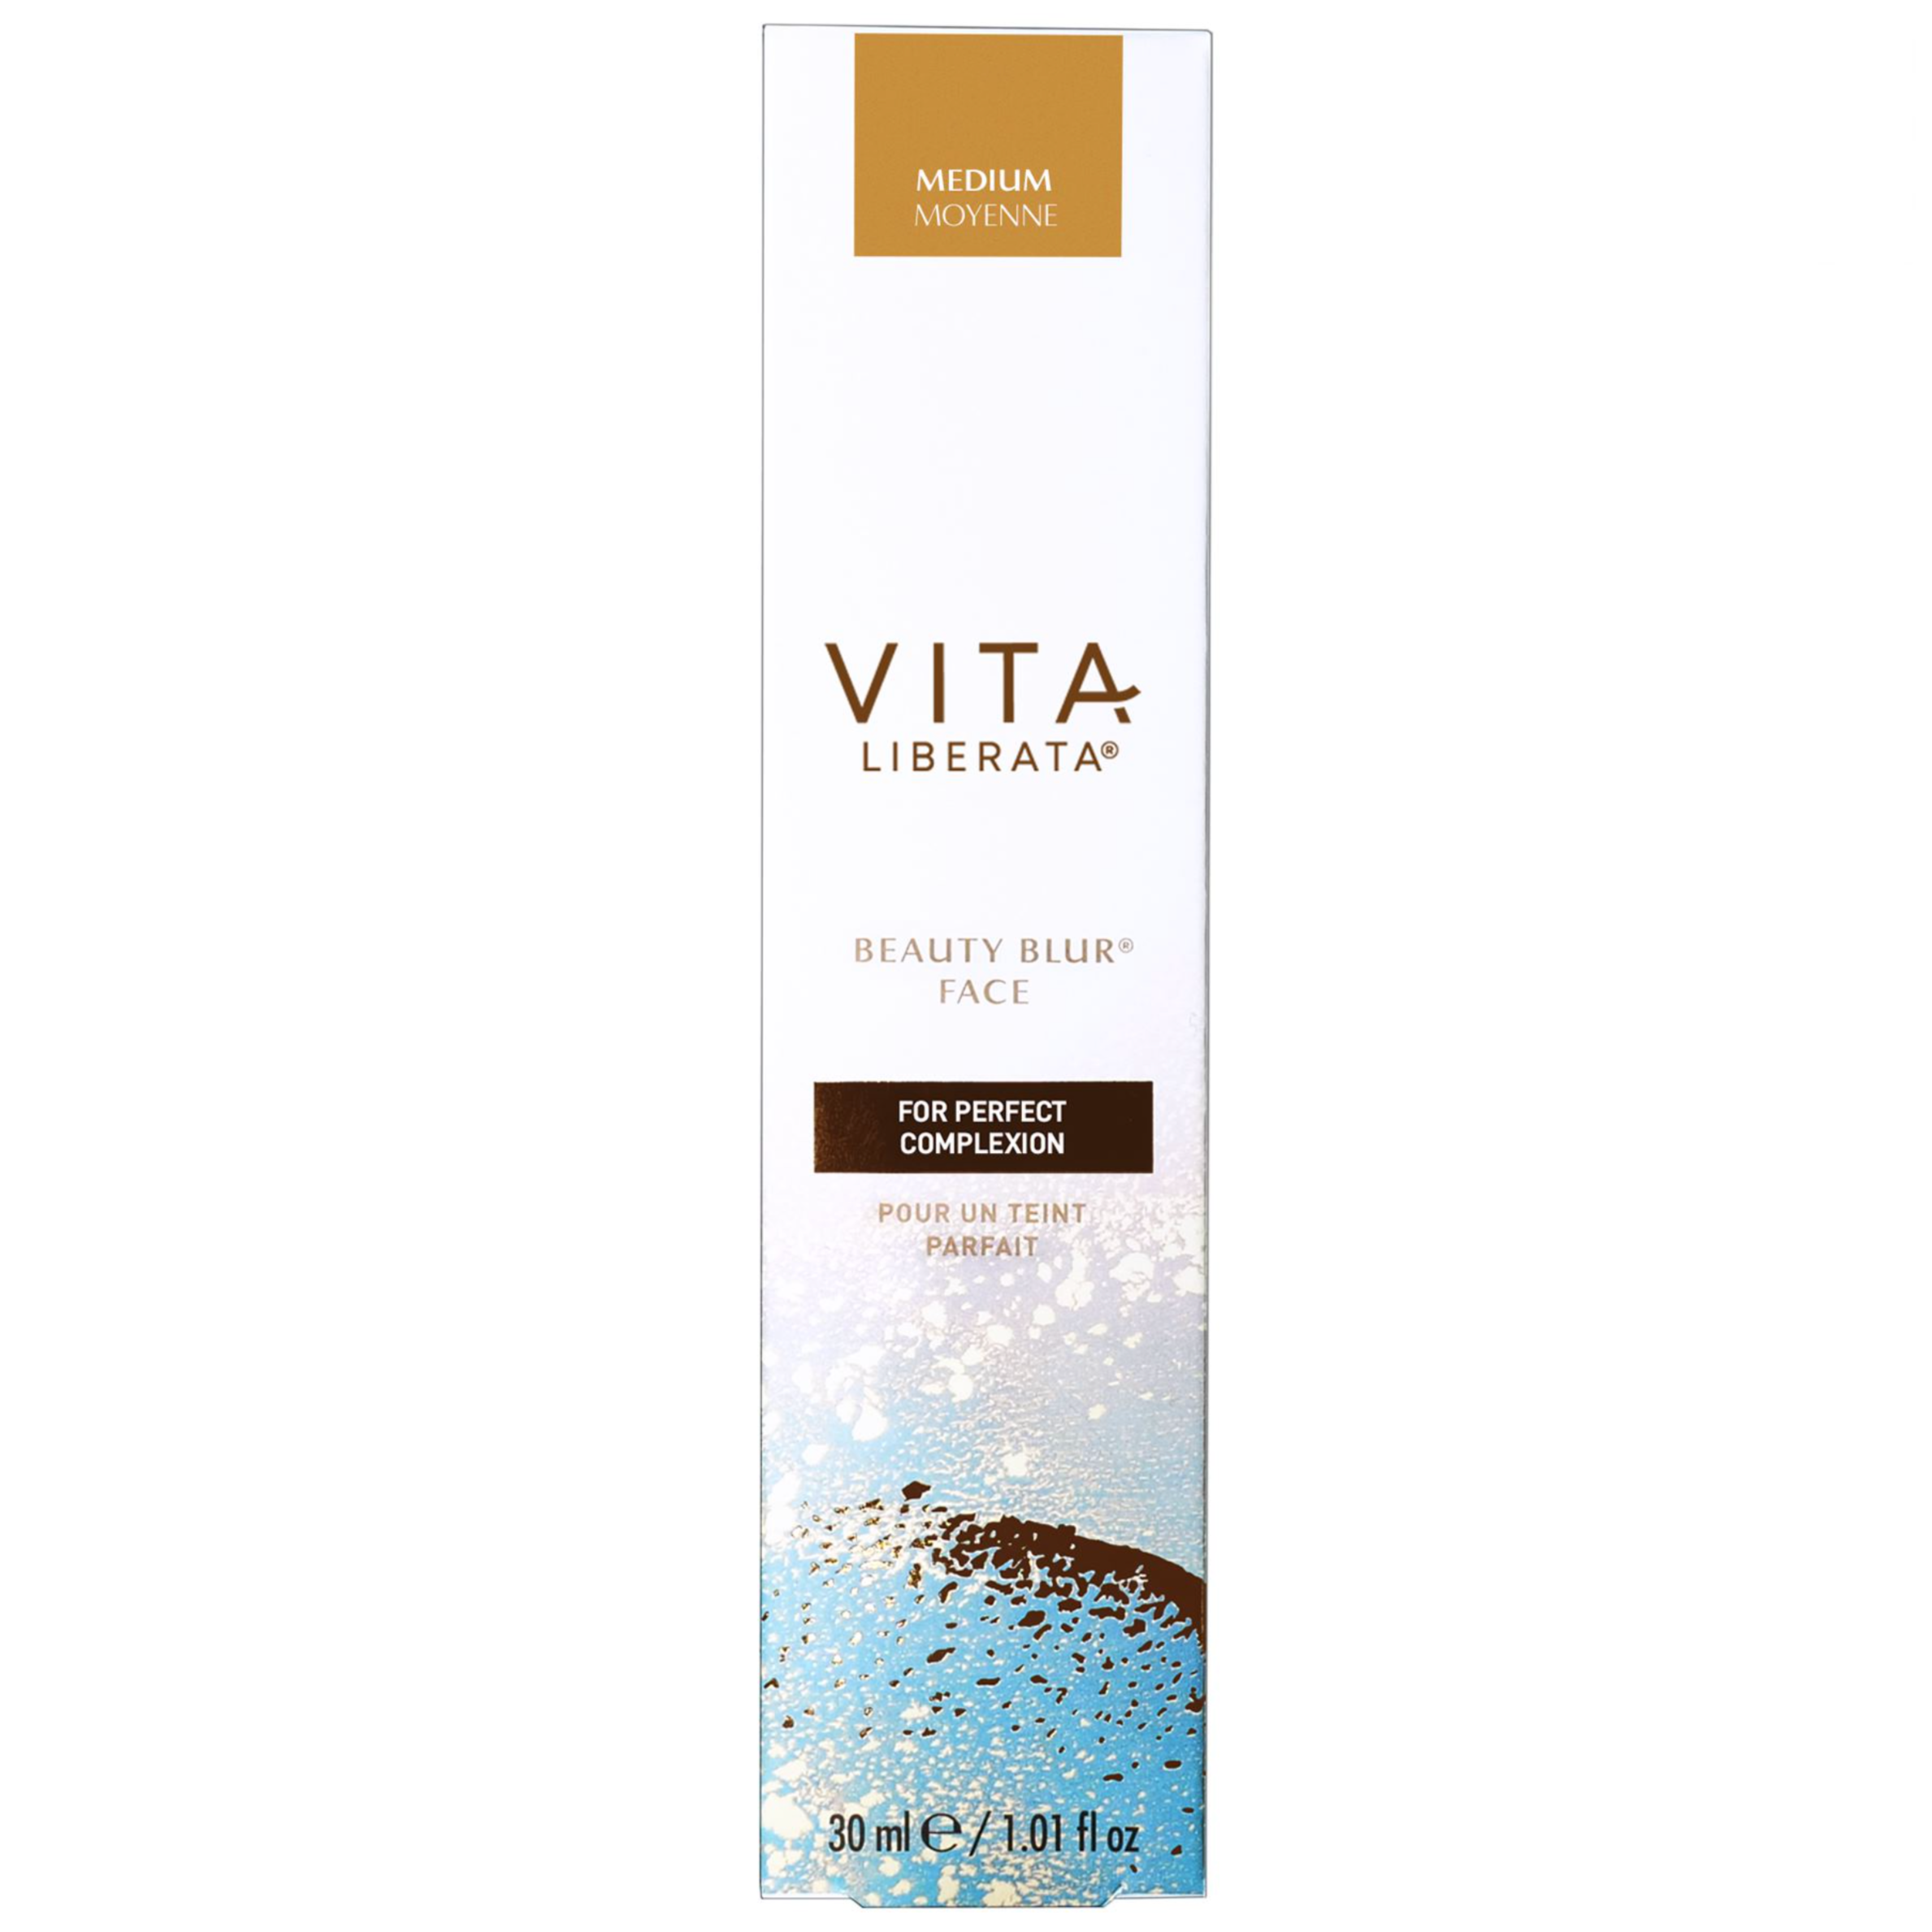 Vita Liberata Beauty Blur Face, packaging